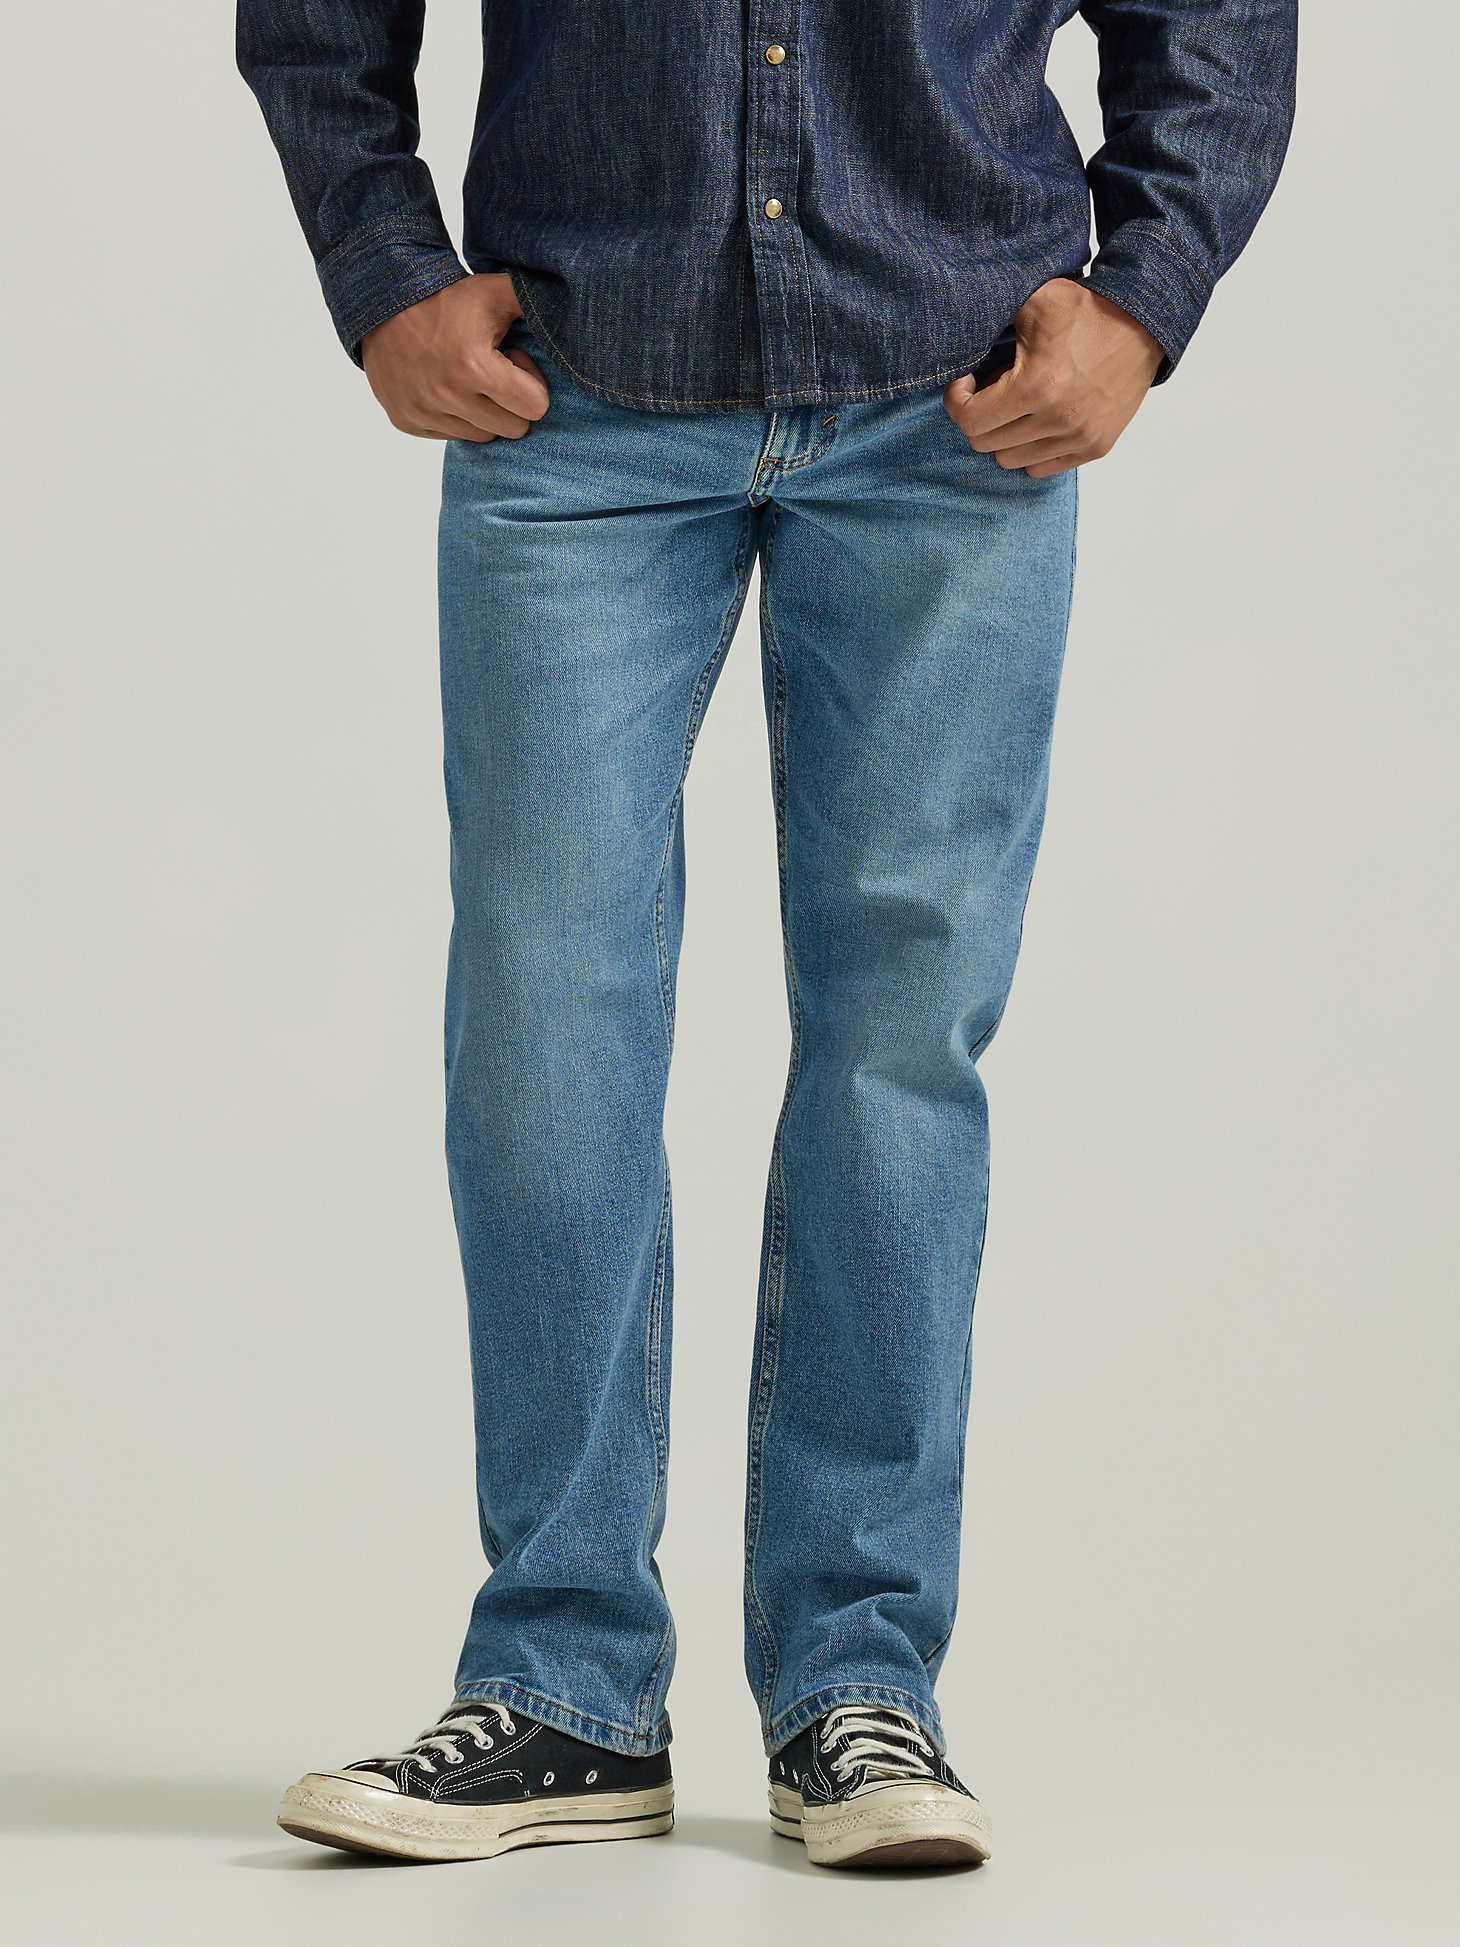 Men's Regular Fit Flex Jean in Light Wash alternative view 1